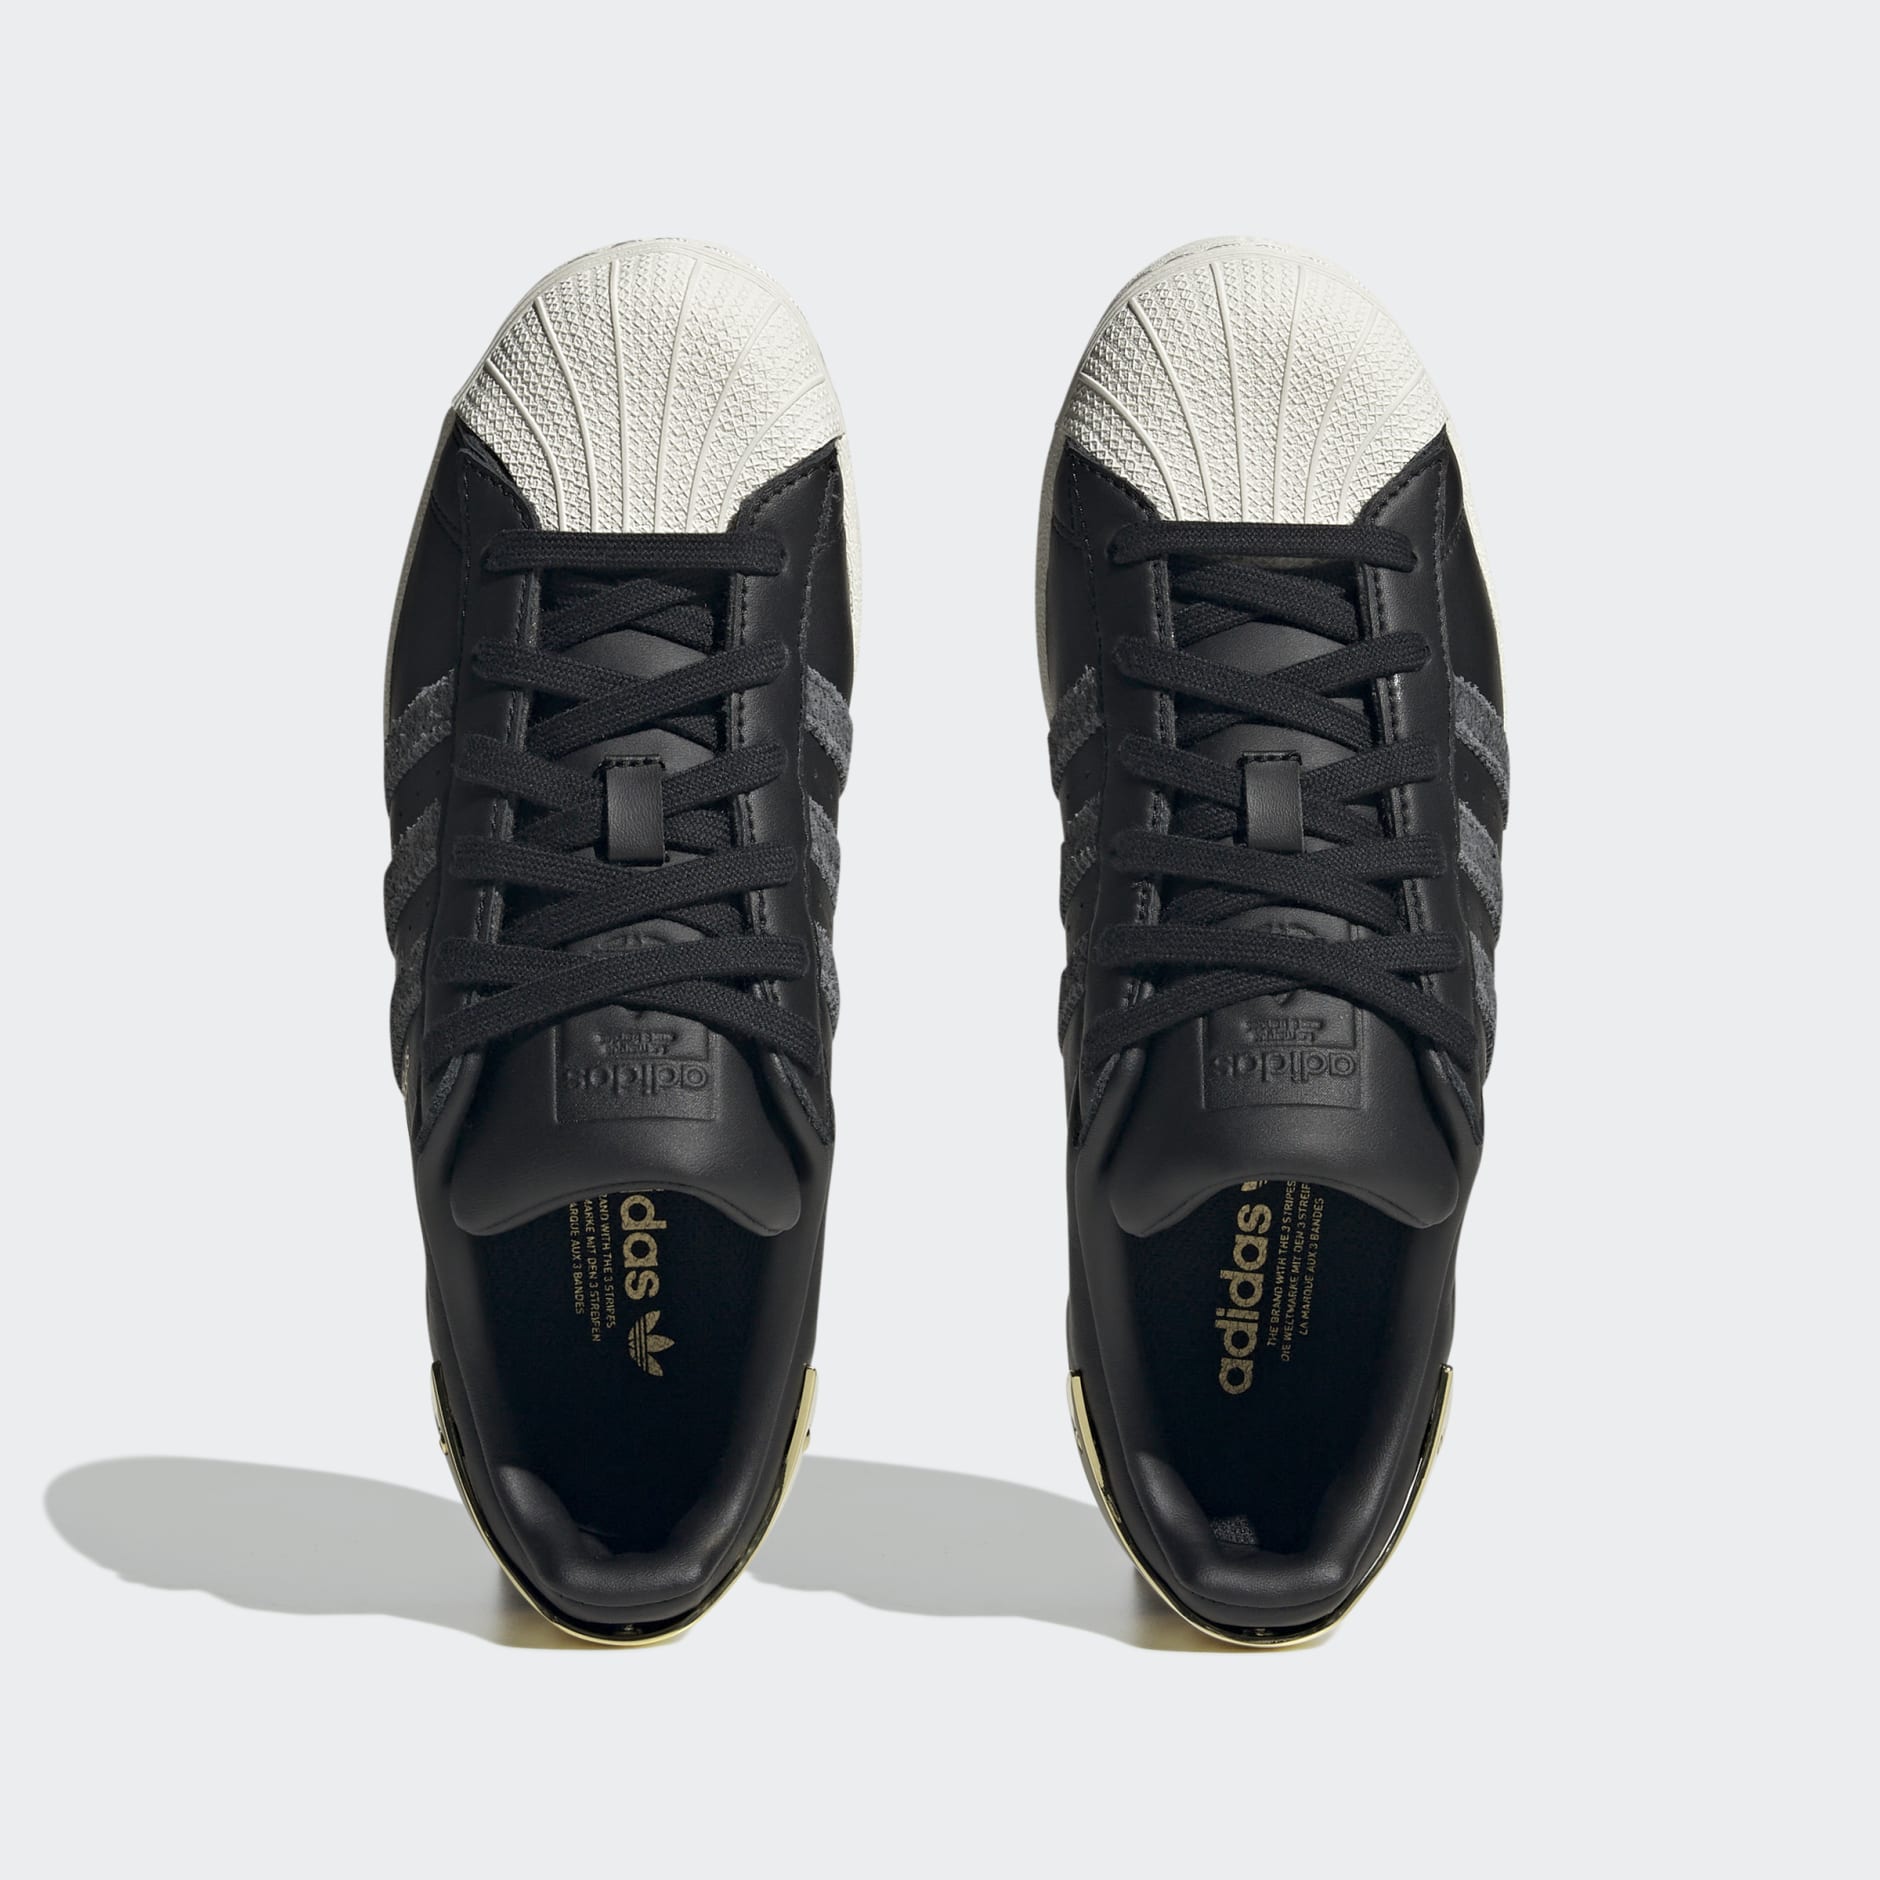 Olla de crack revista Ewell Women's Shoes - Superstar Shoes - Black | adidas Oman